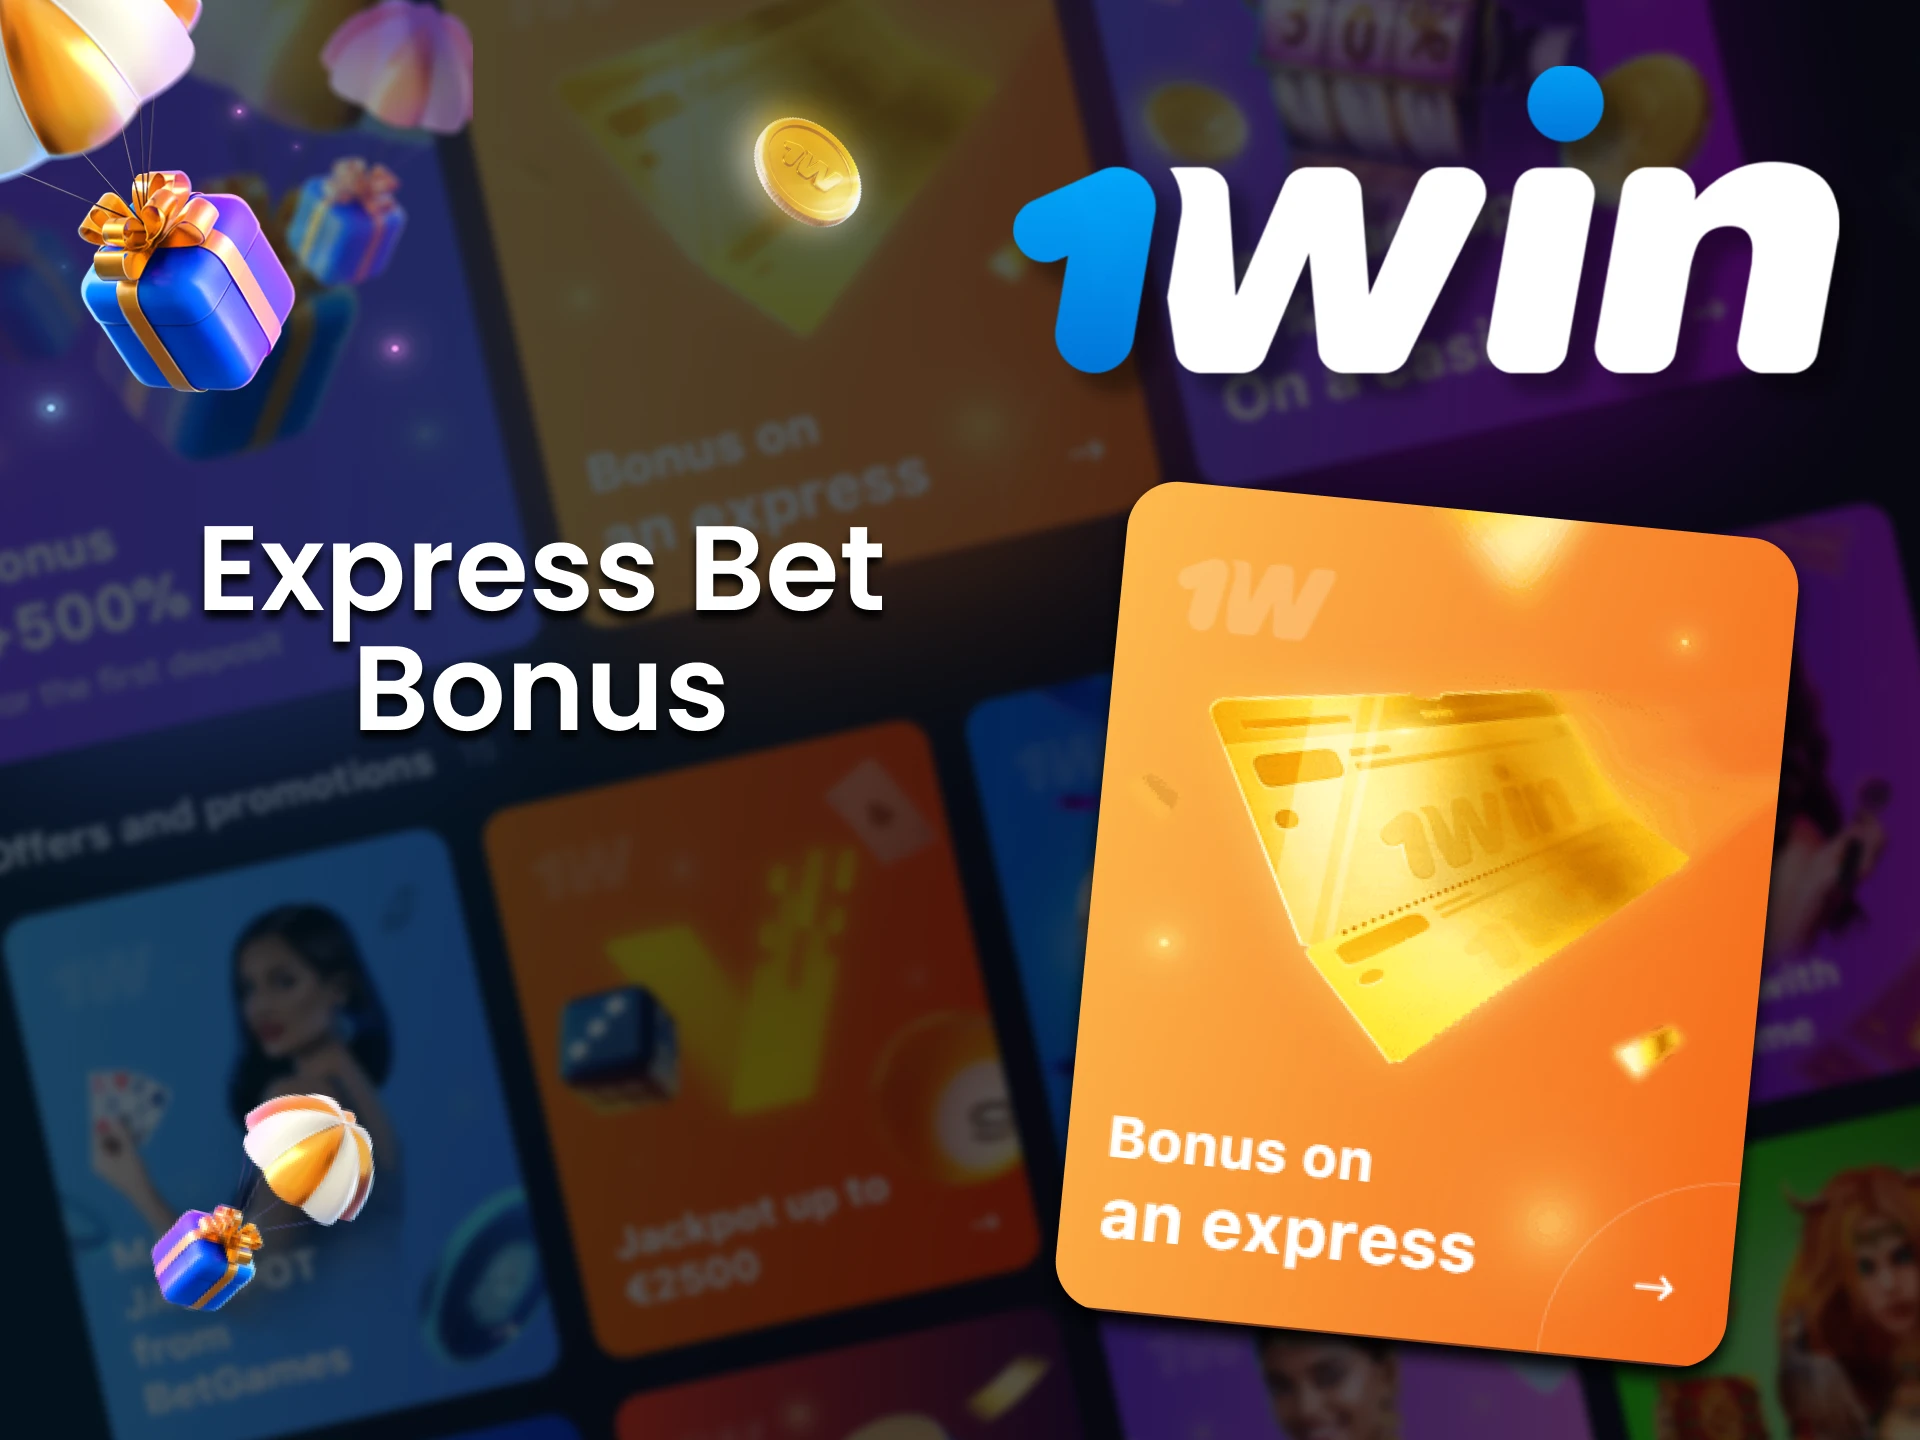 Get 1win Cricket Express Bonus.